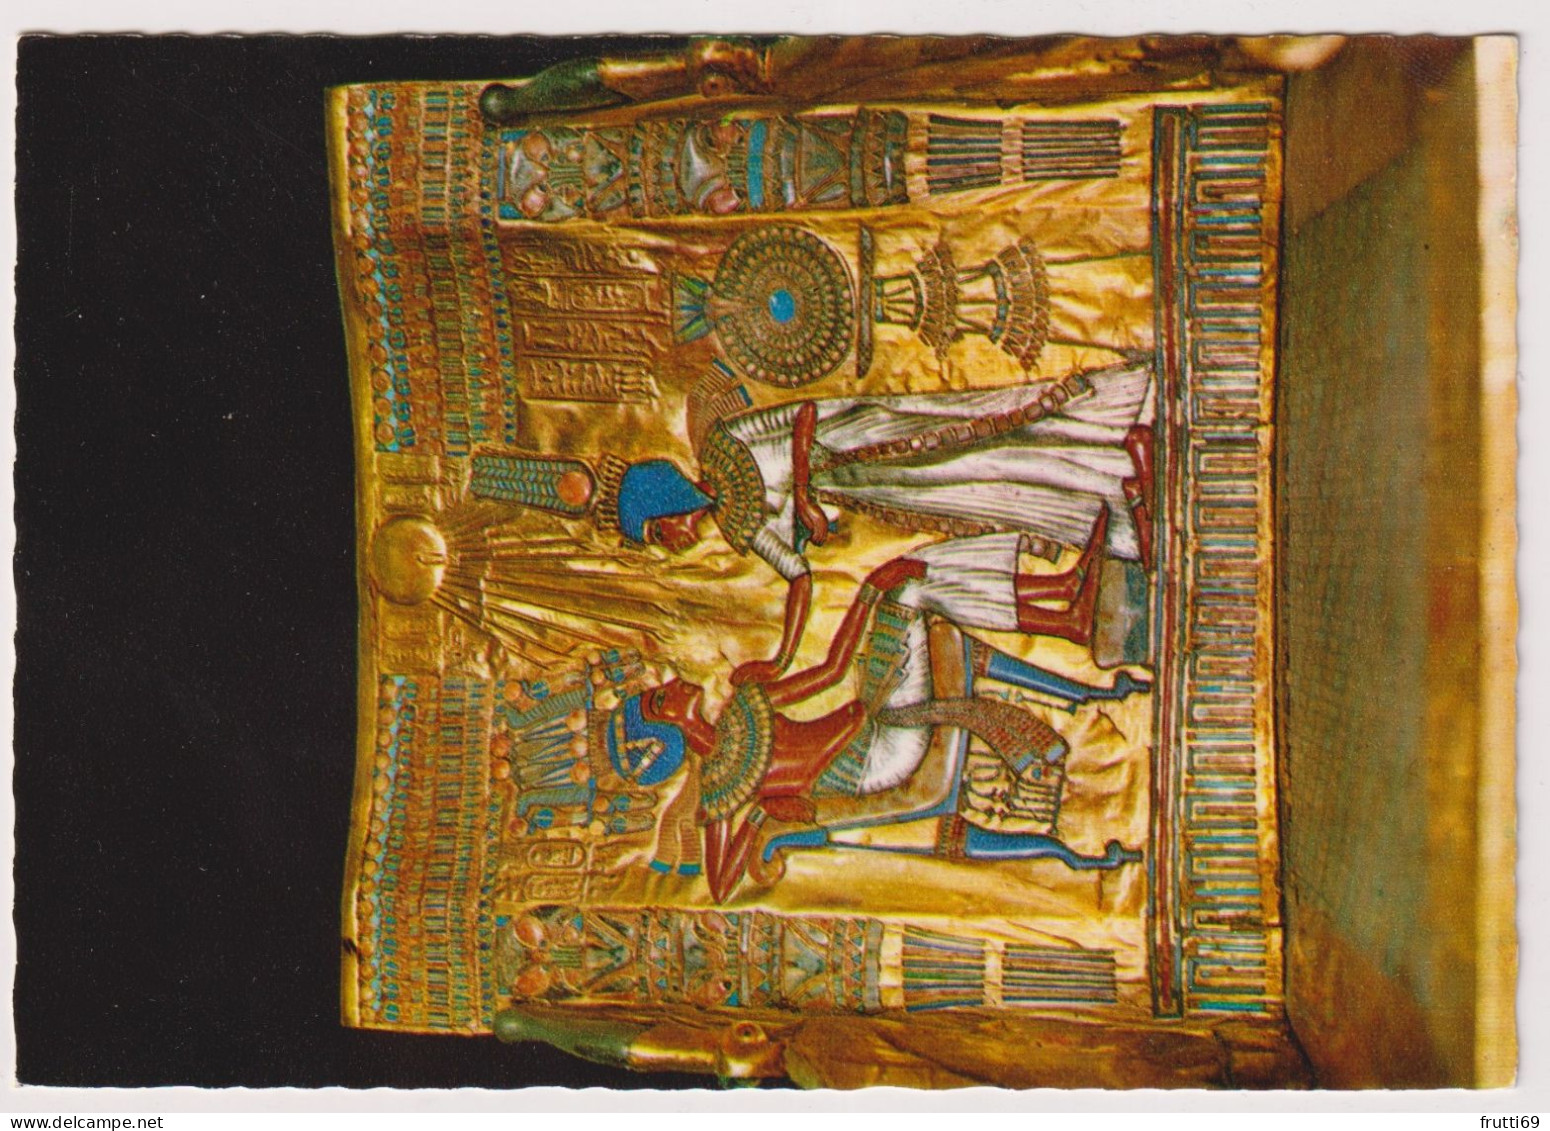 AK 198255 EGYPT - Cairo - The Egyptian Museum - The Throne Of King Tut-Ankh Amun - Musei